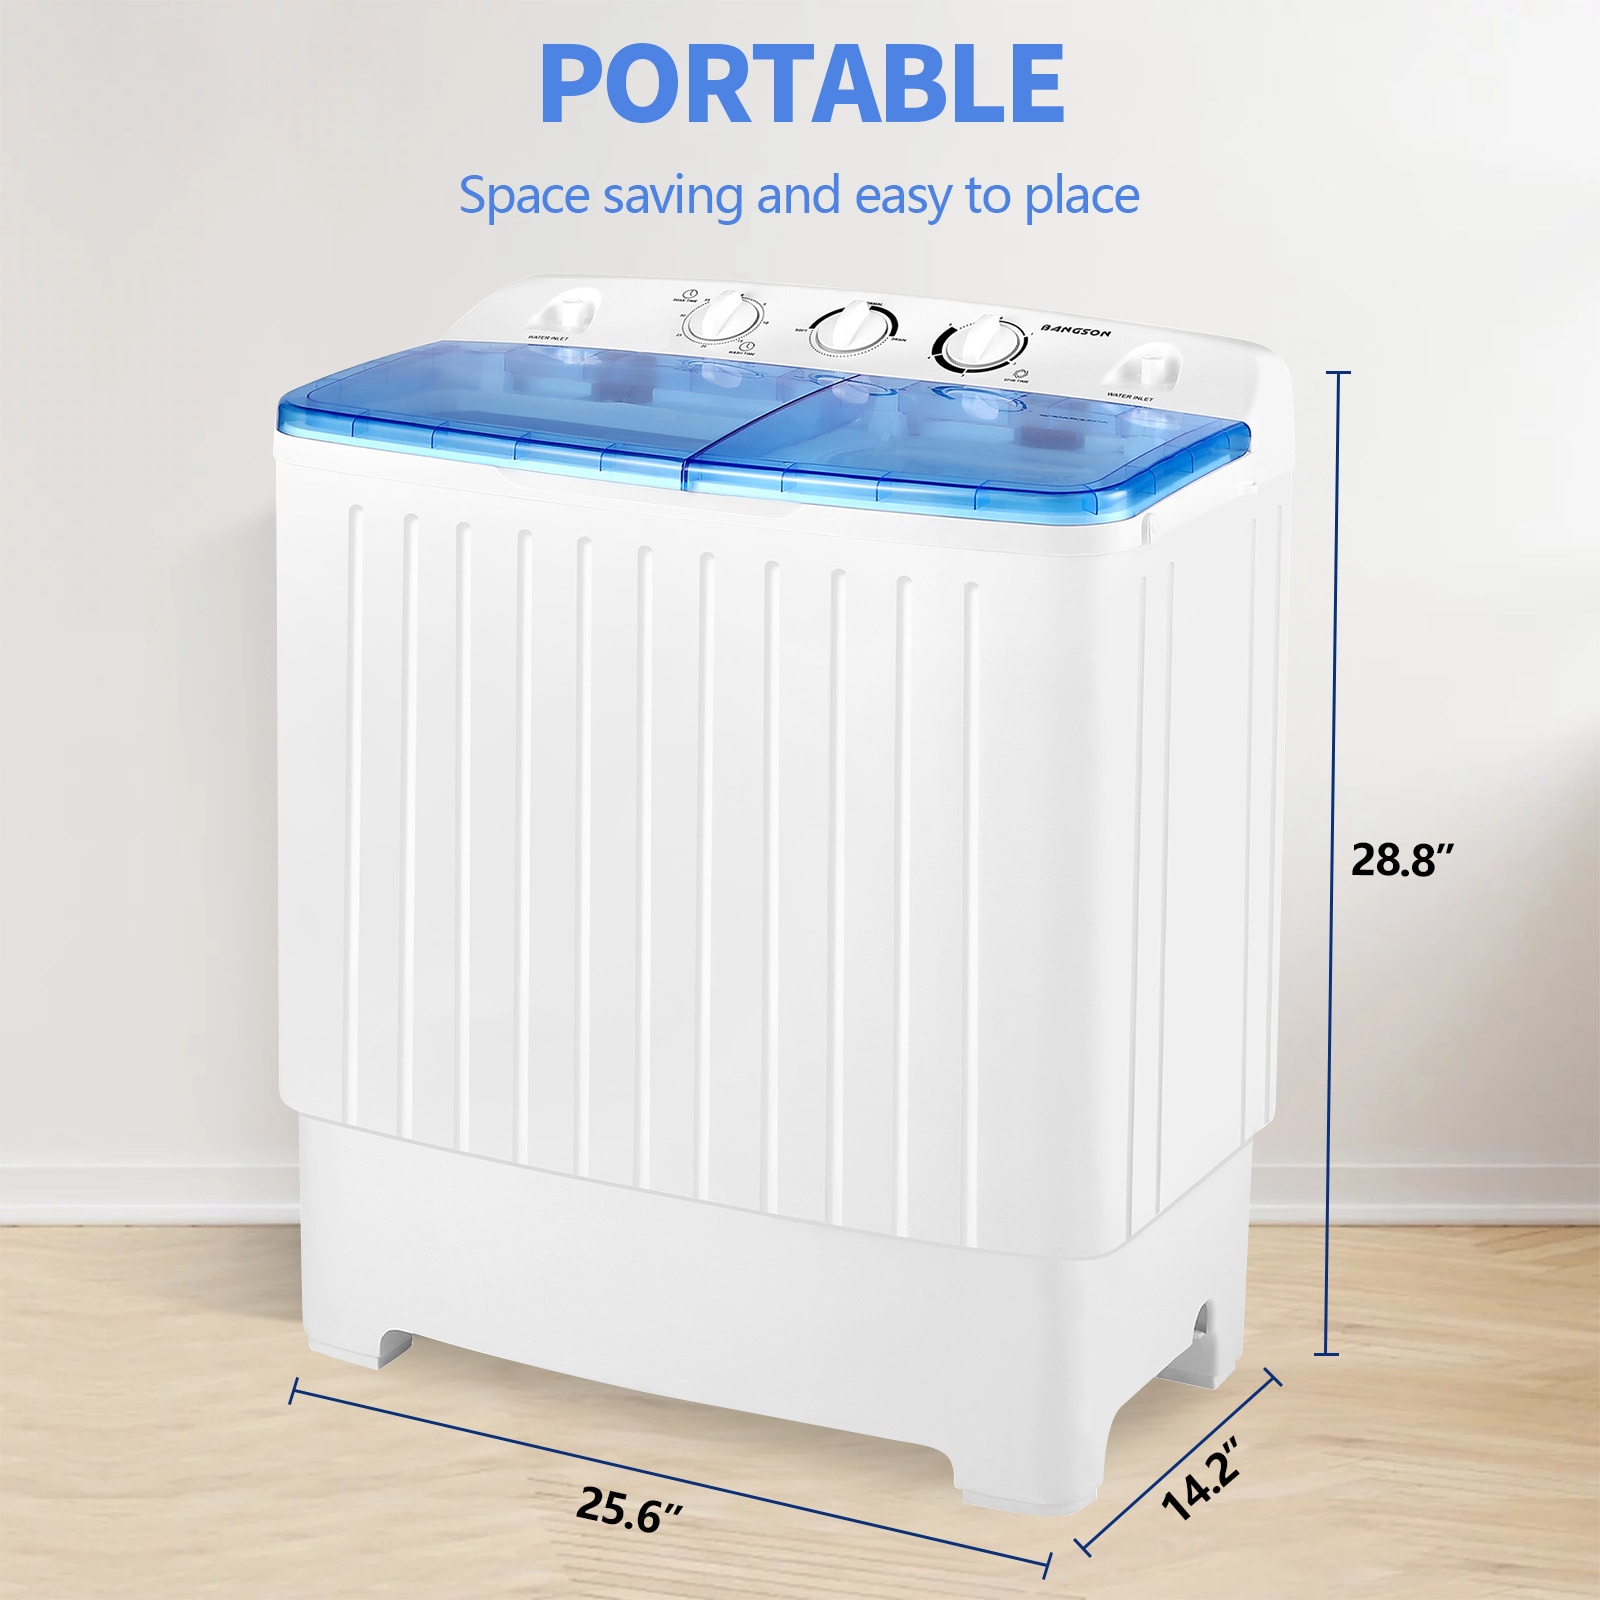 COMFEE' 1.6 Cu.ft Portable Washing Machine - Review 2023 